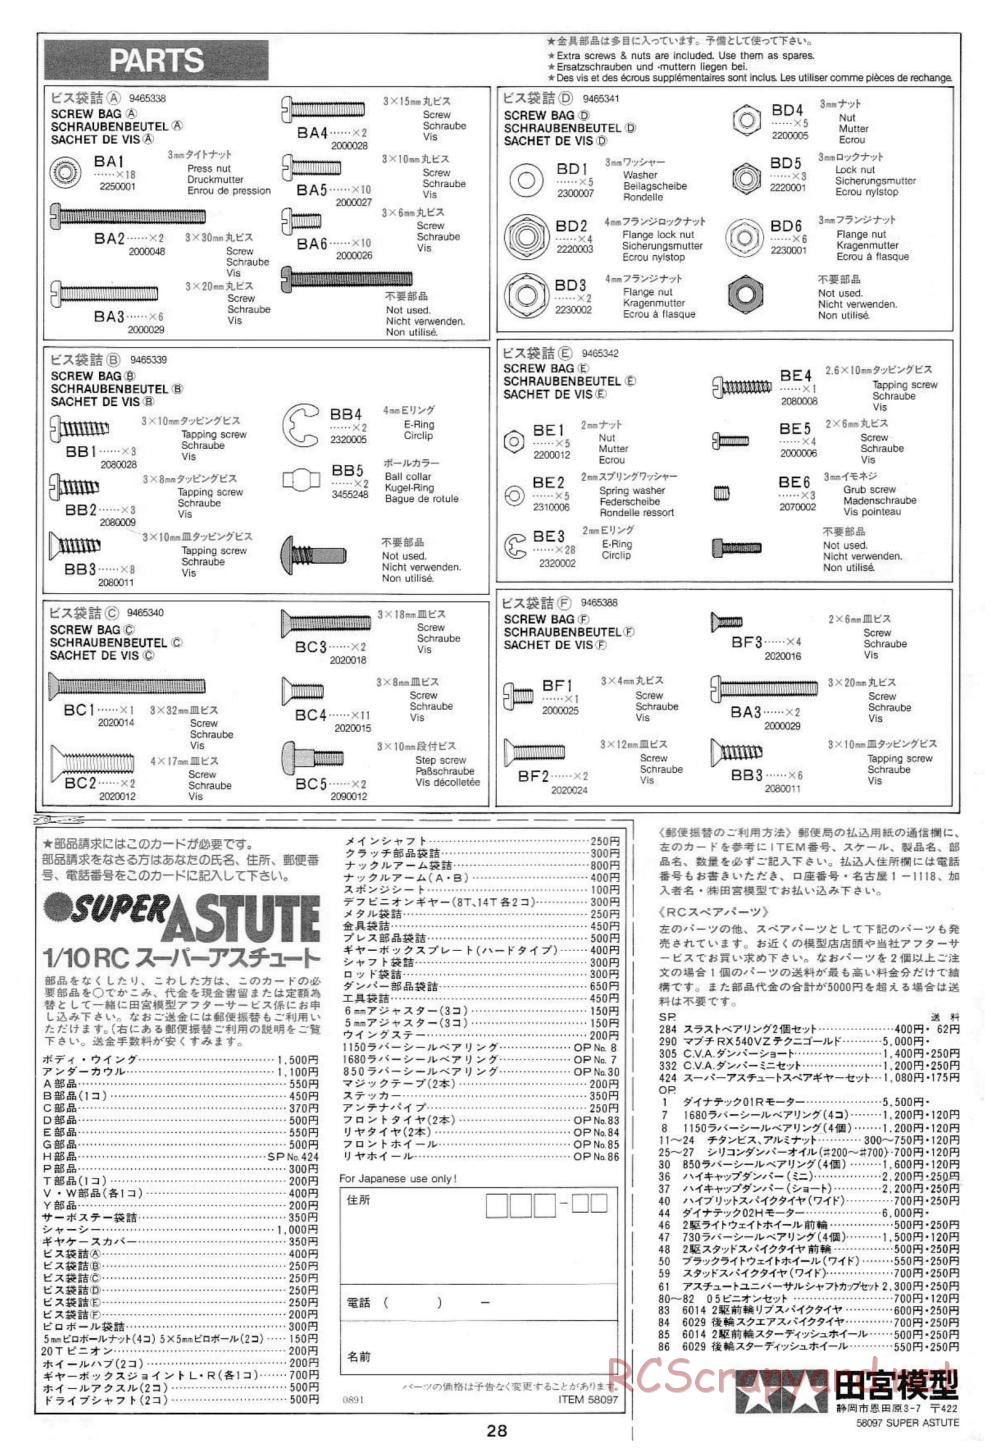 Tamiya - Super Astute - 58097 - Manual - Page 28